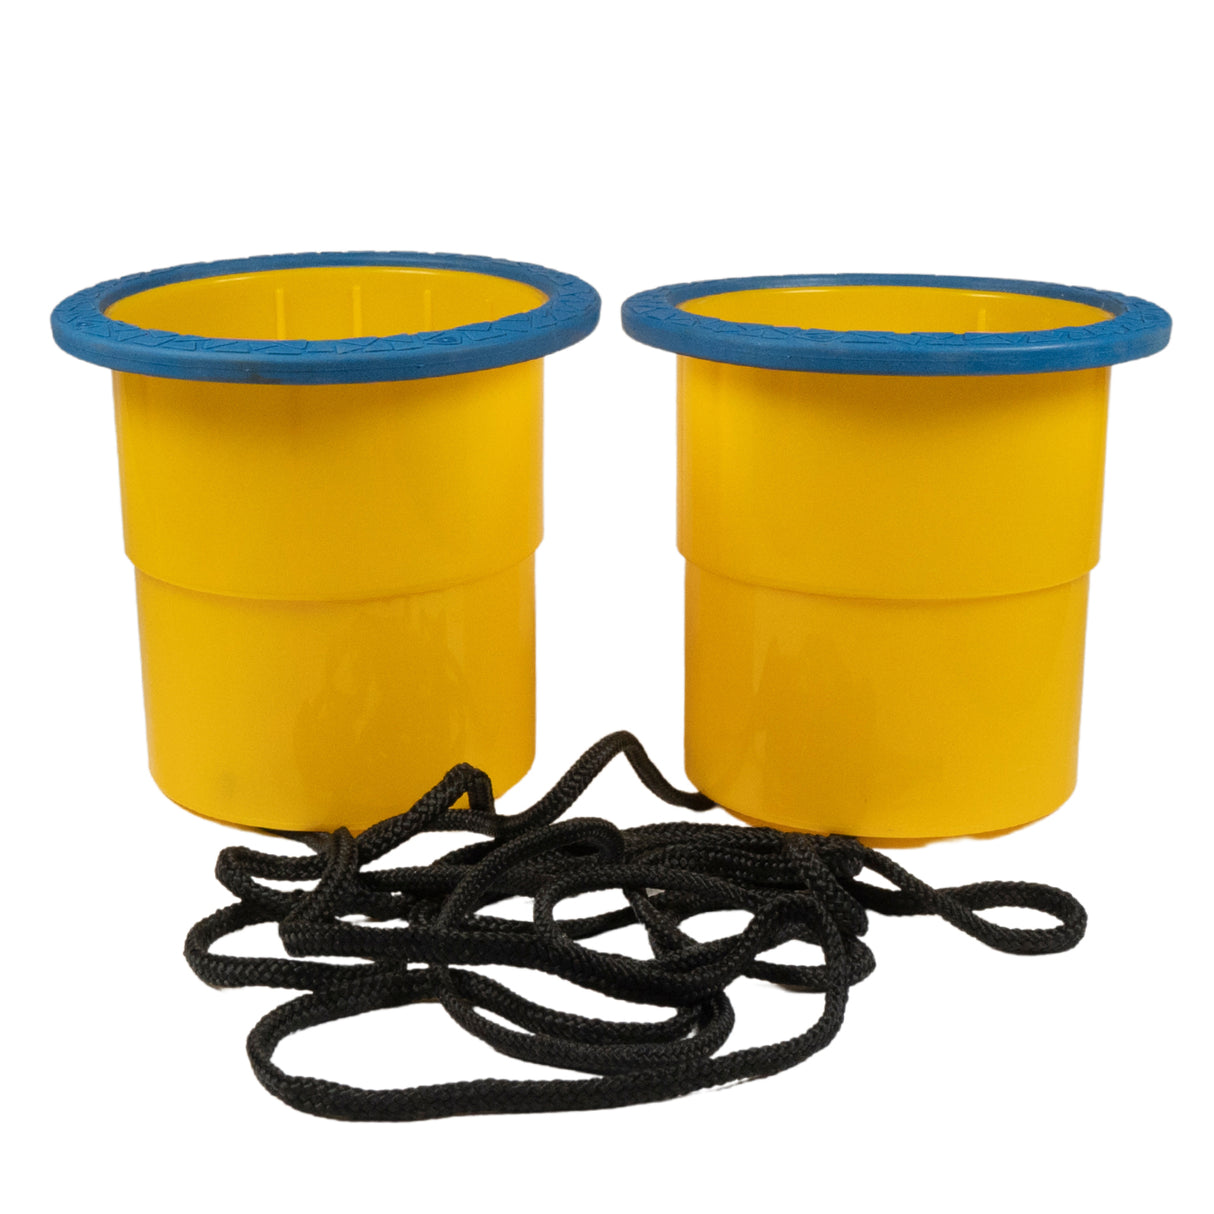 DS Bucket Stilts - Pair (3 colors available)